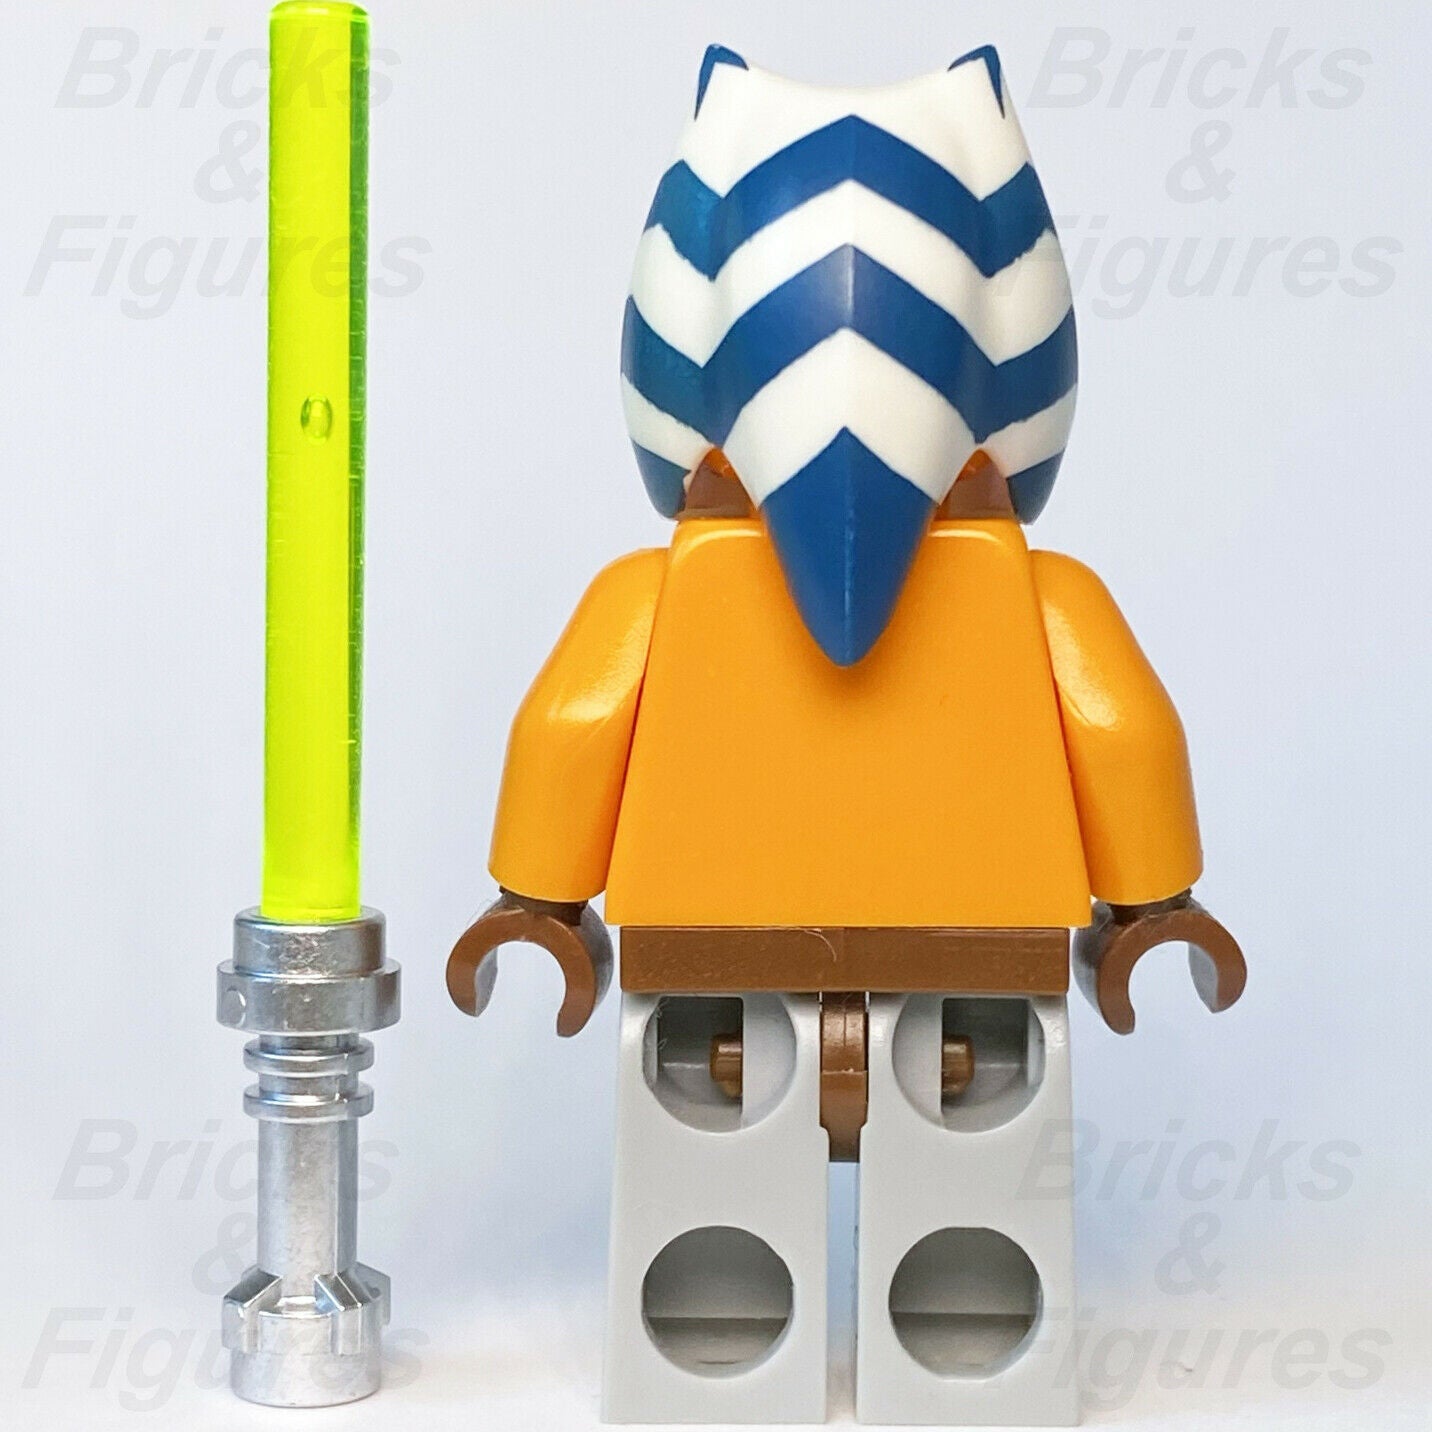 Star Wars LEGO Ahsoka Tano Jedi Padawan Clone Wars Minifigure 7751 8037 7675 - Bricks & Figures